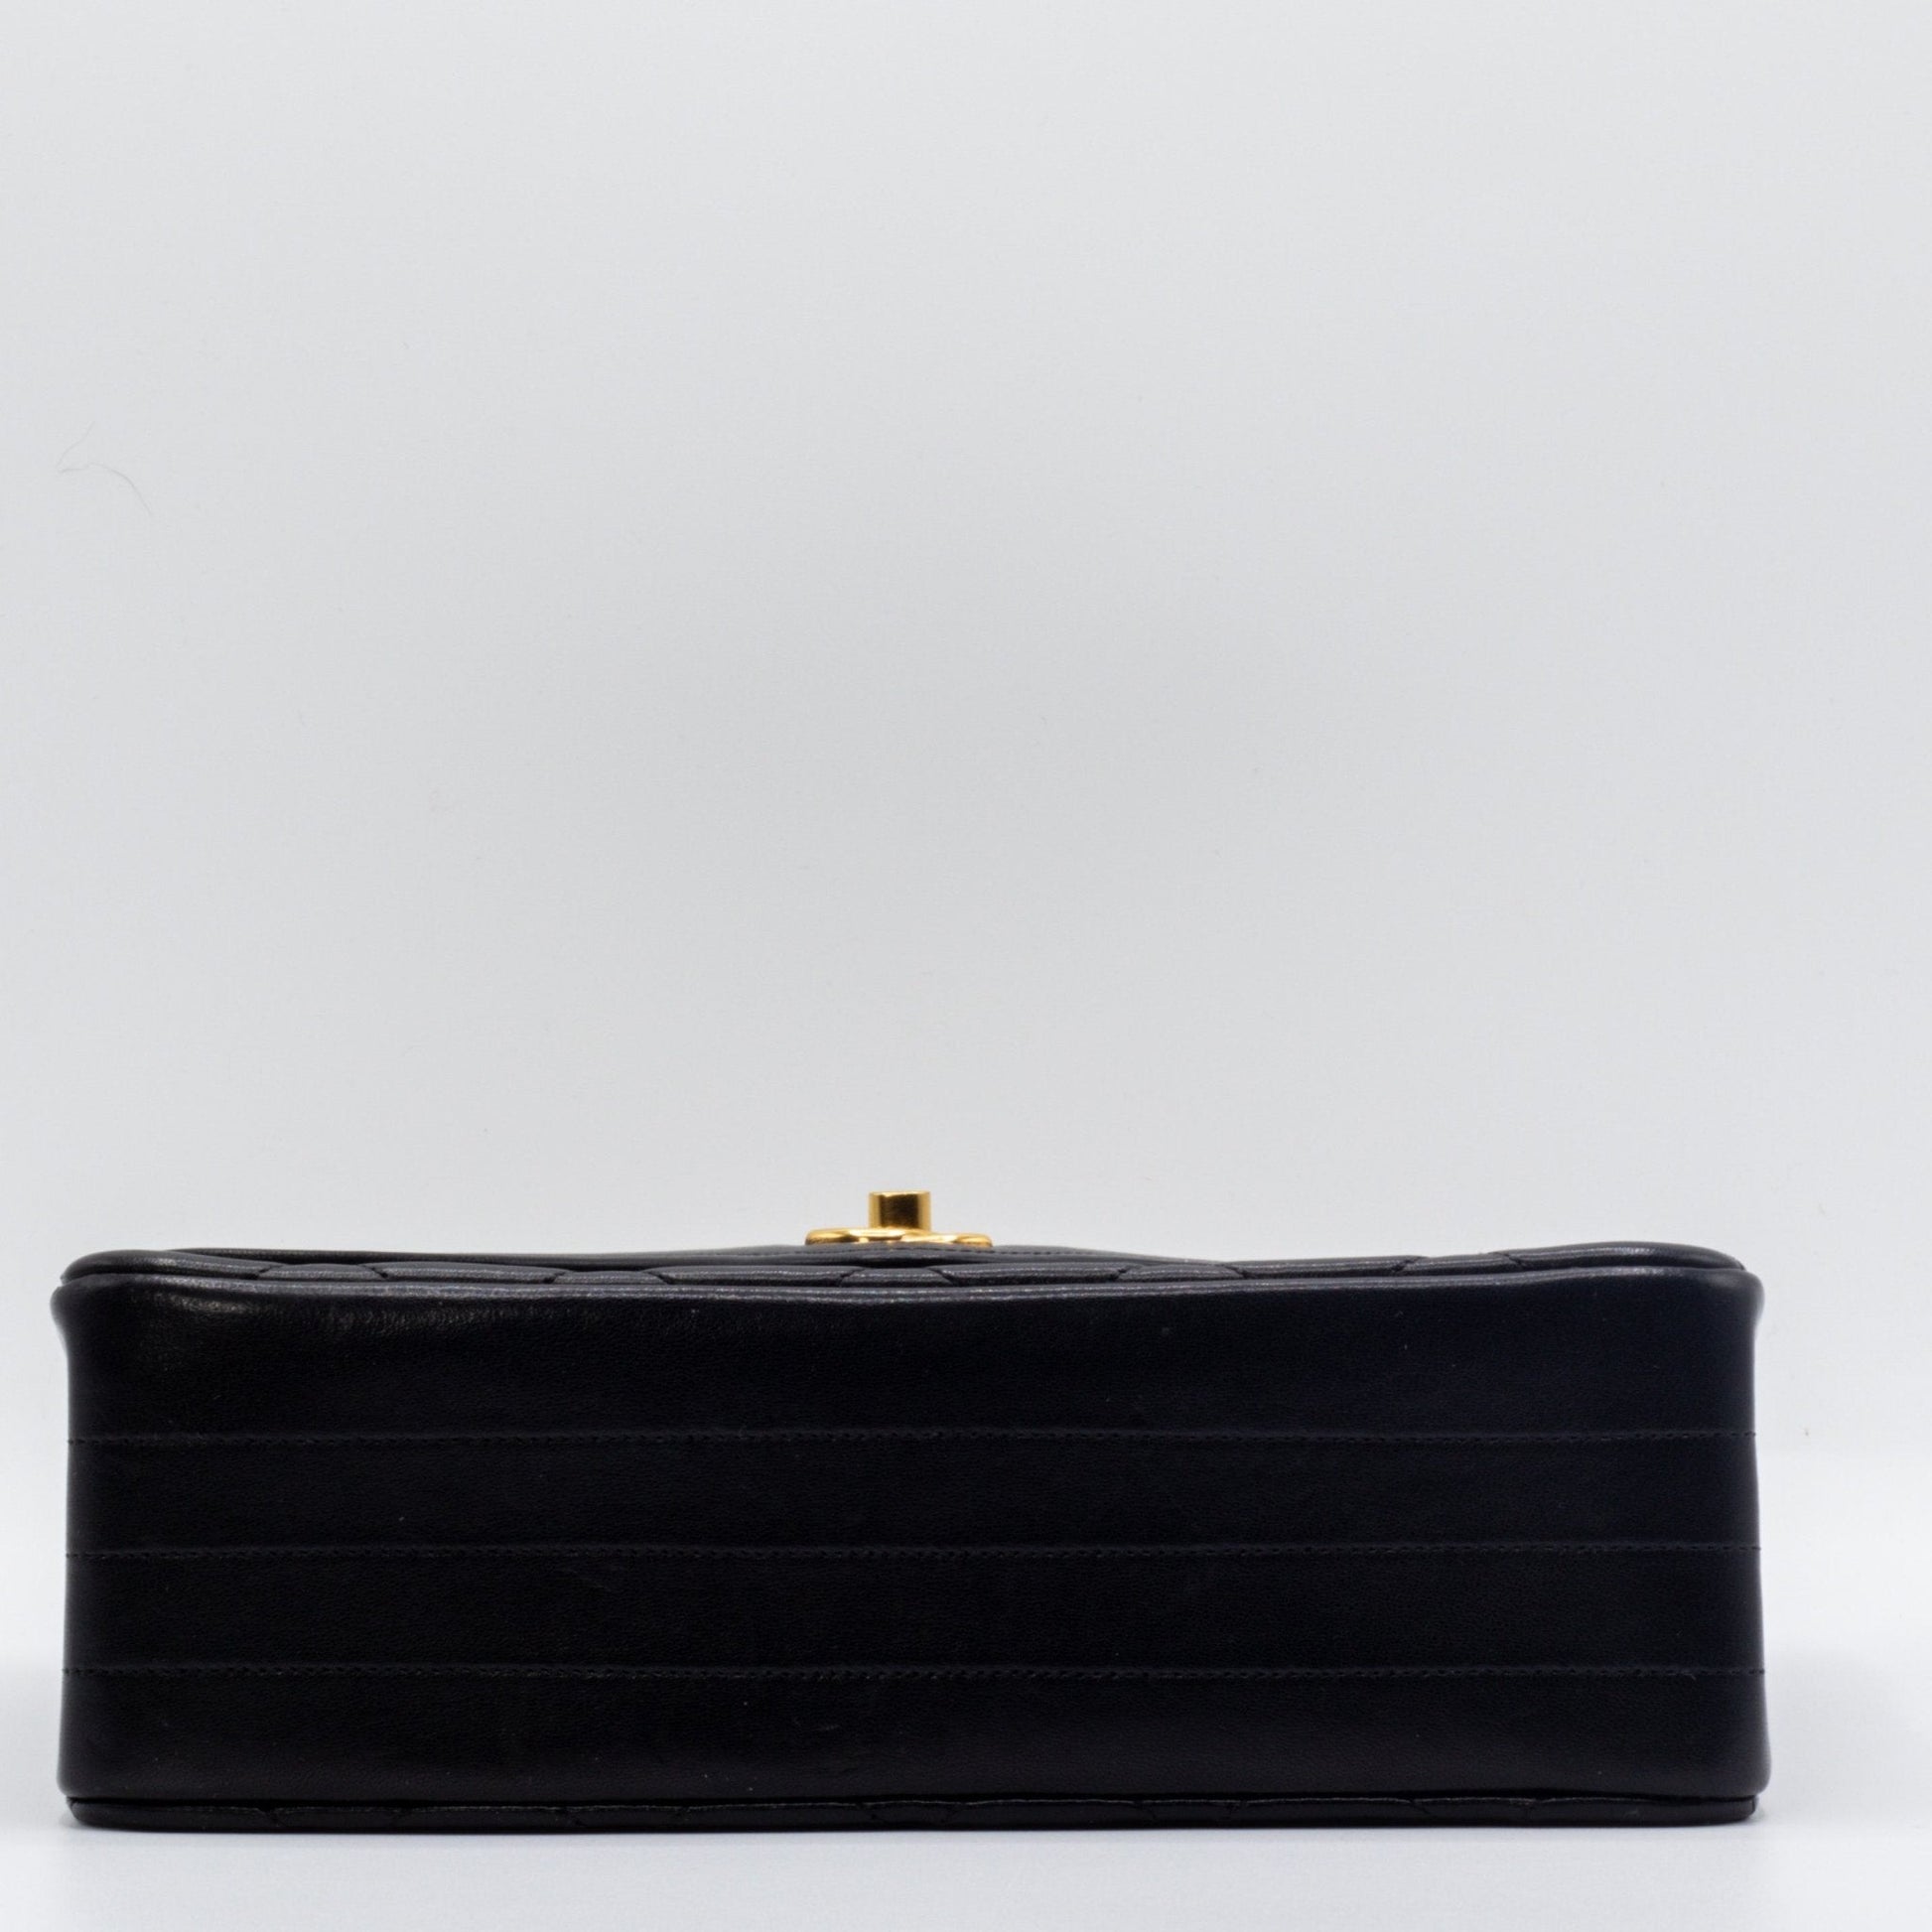 Chanel Classic Flap Bag in Black Matelassé Leather - Tabita Bags – Tabita  Bags with Love